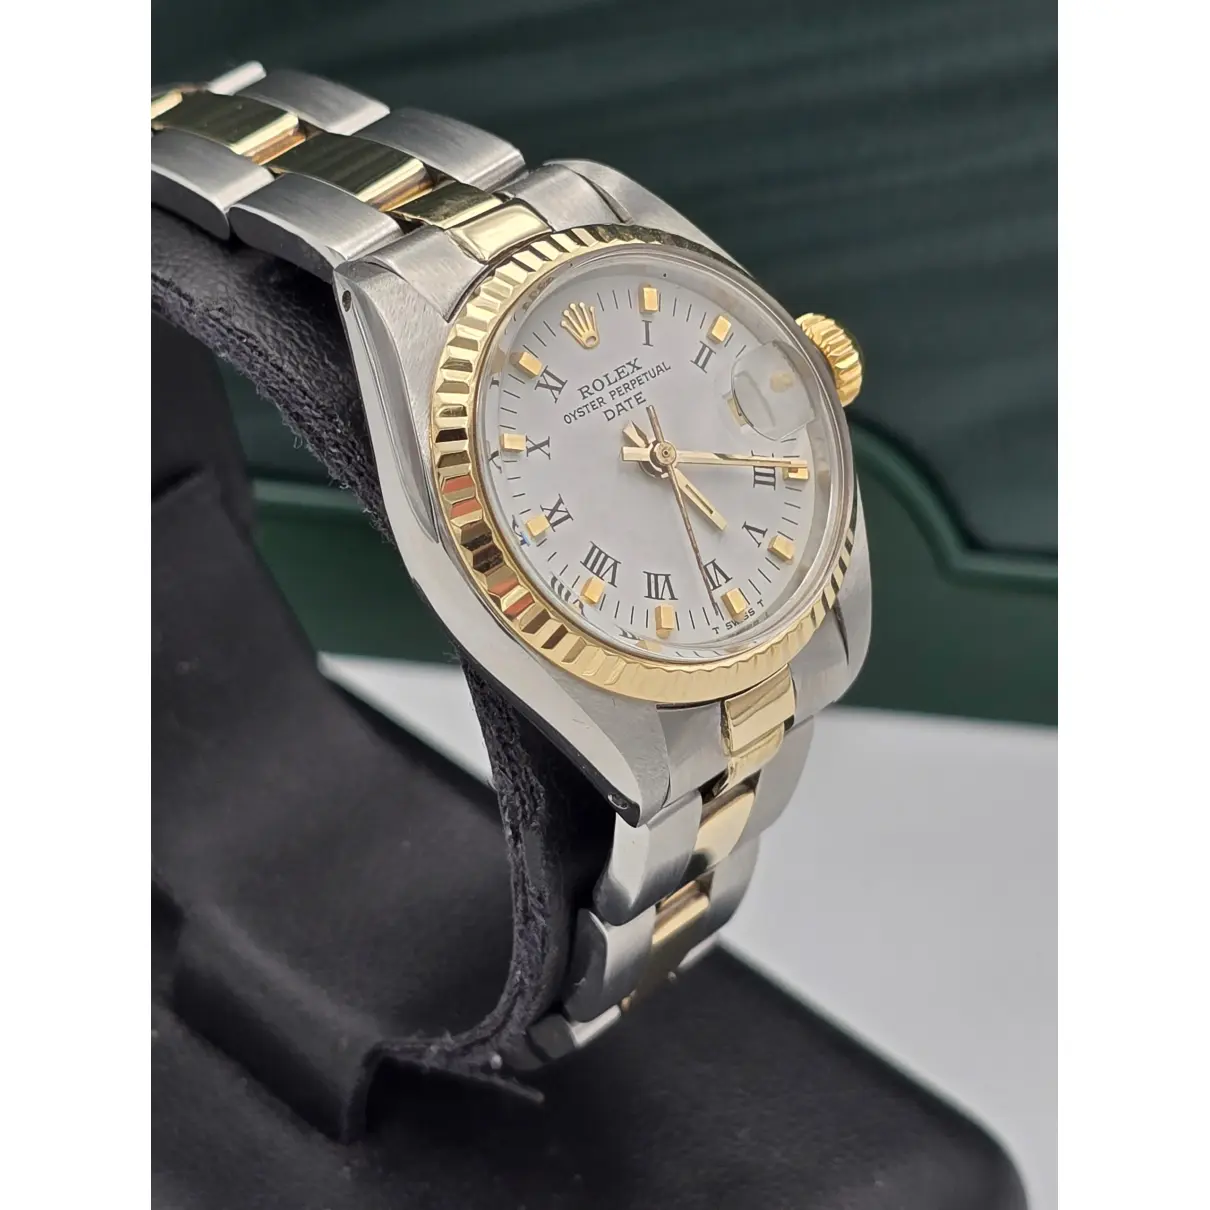 Buy Rolex Day-Date watch online